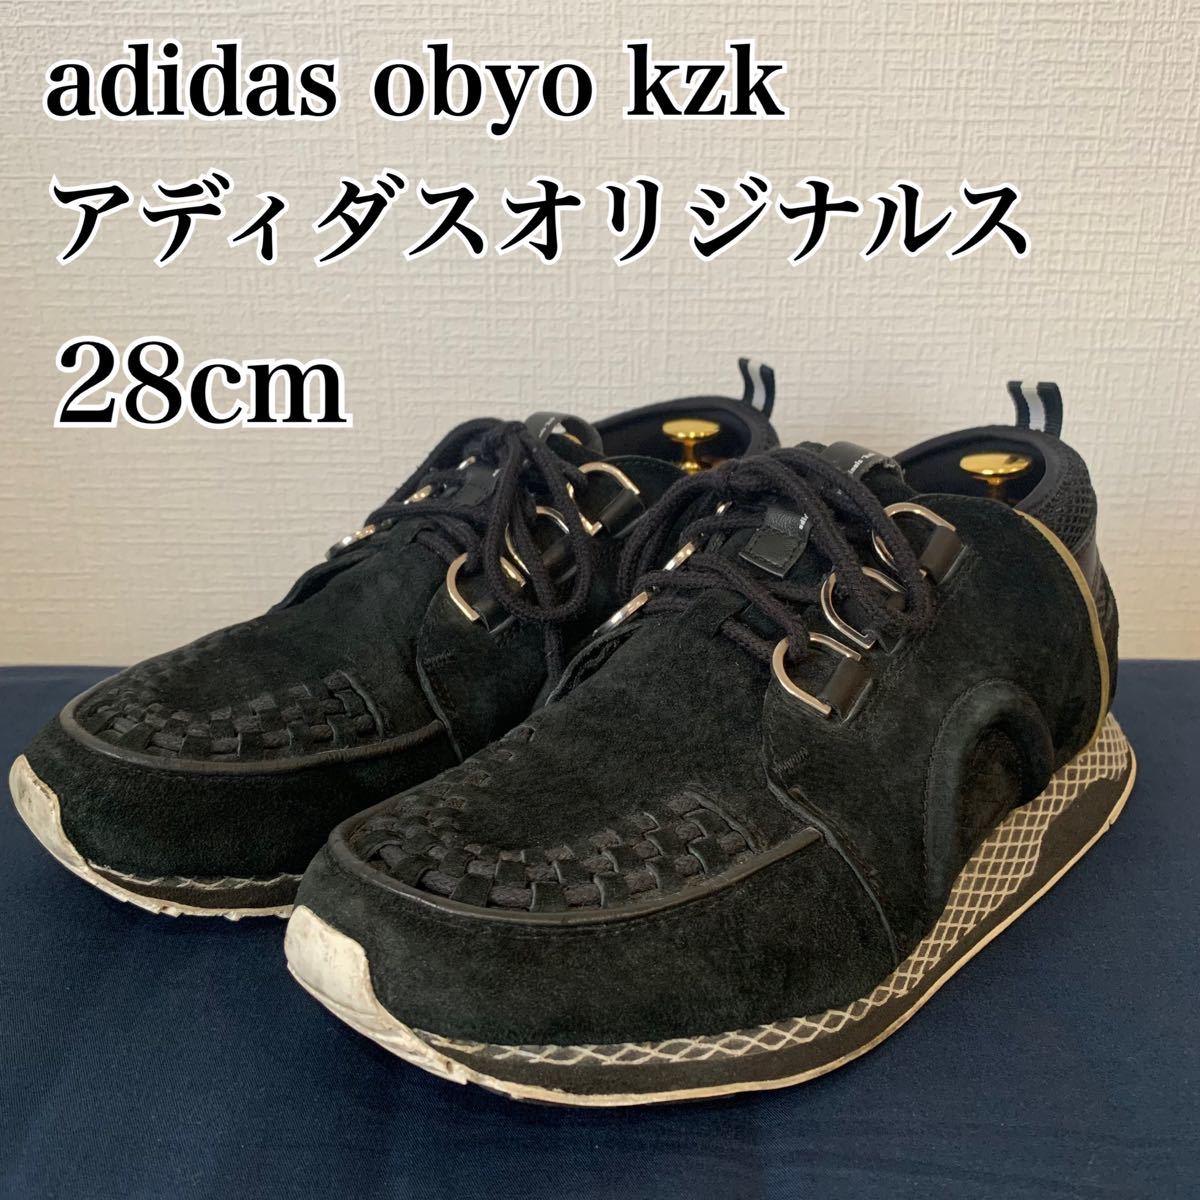 adidas originals obyo kzk ZX MOCC 28cm アディダスオリジナルス スウェード スエード